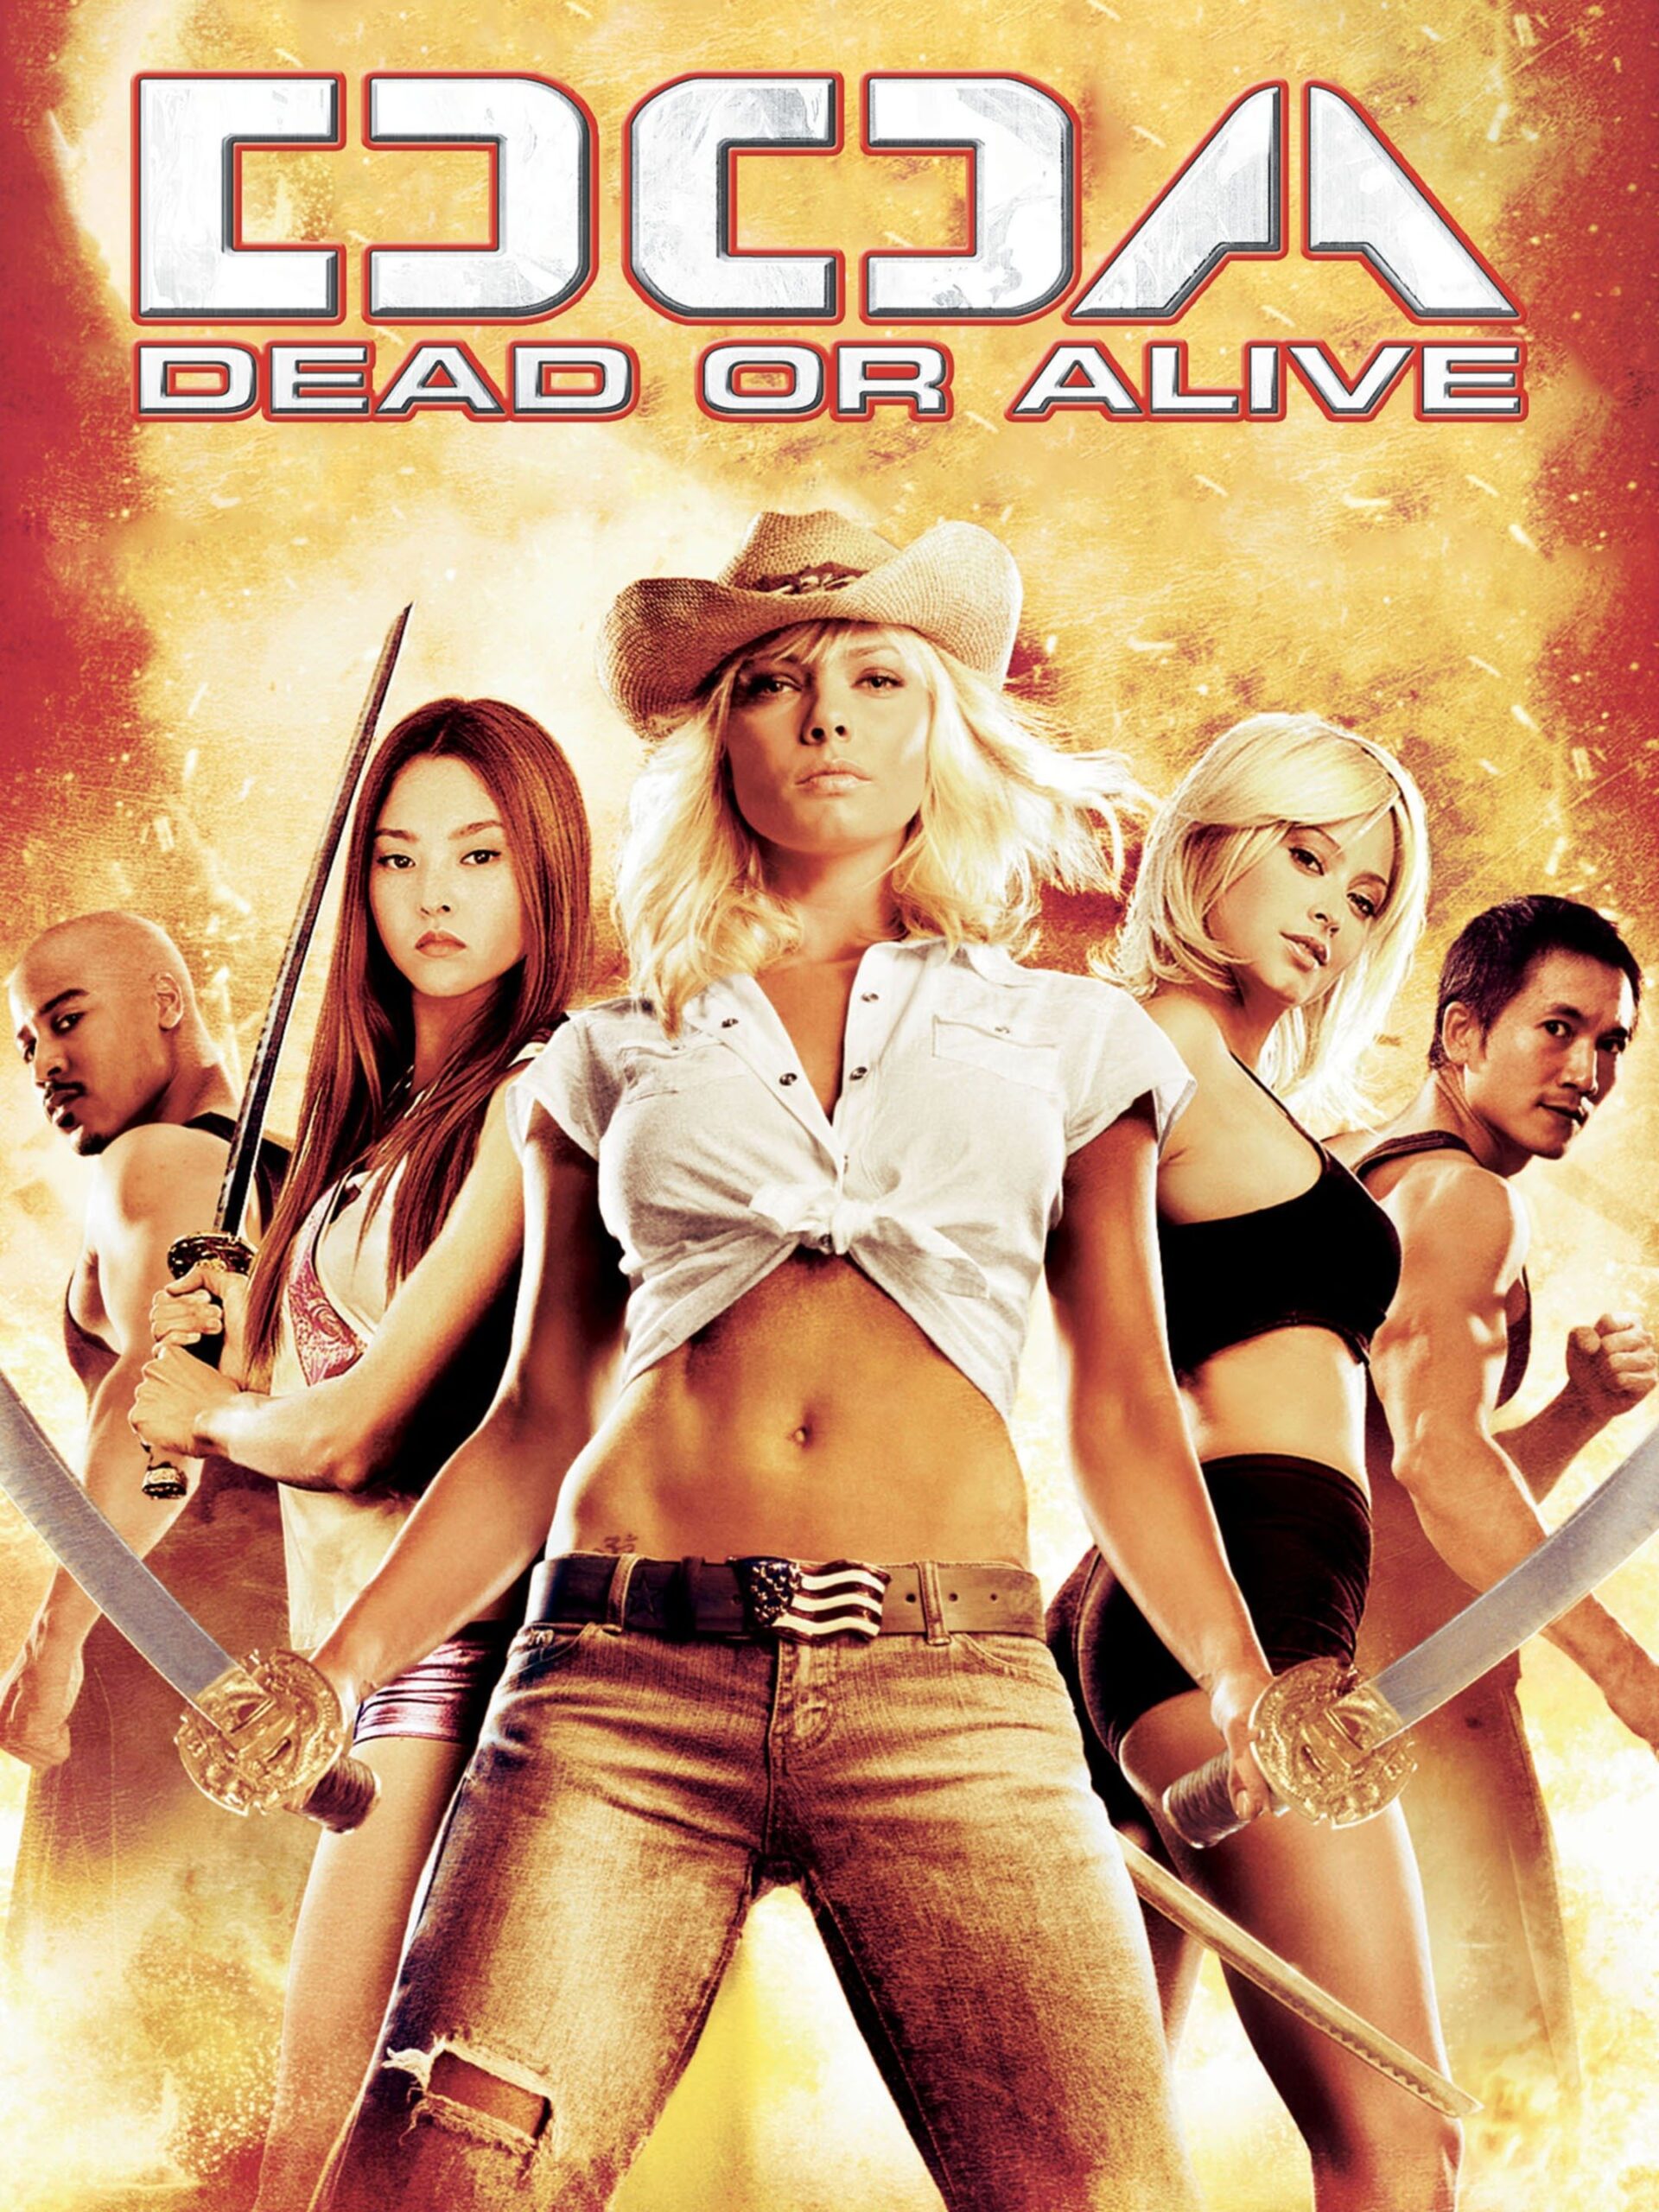 DOA DEAD OR ALIVE (2007)